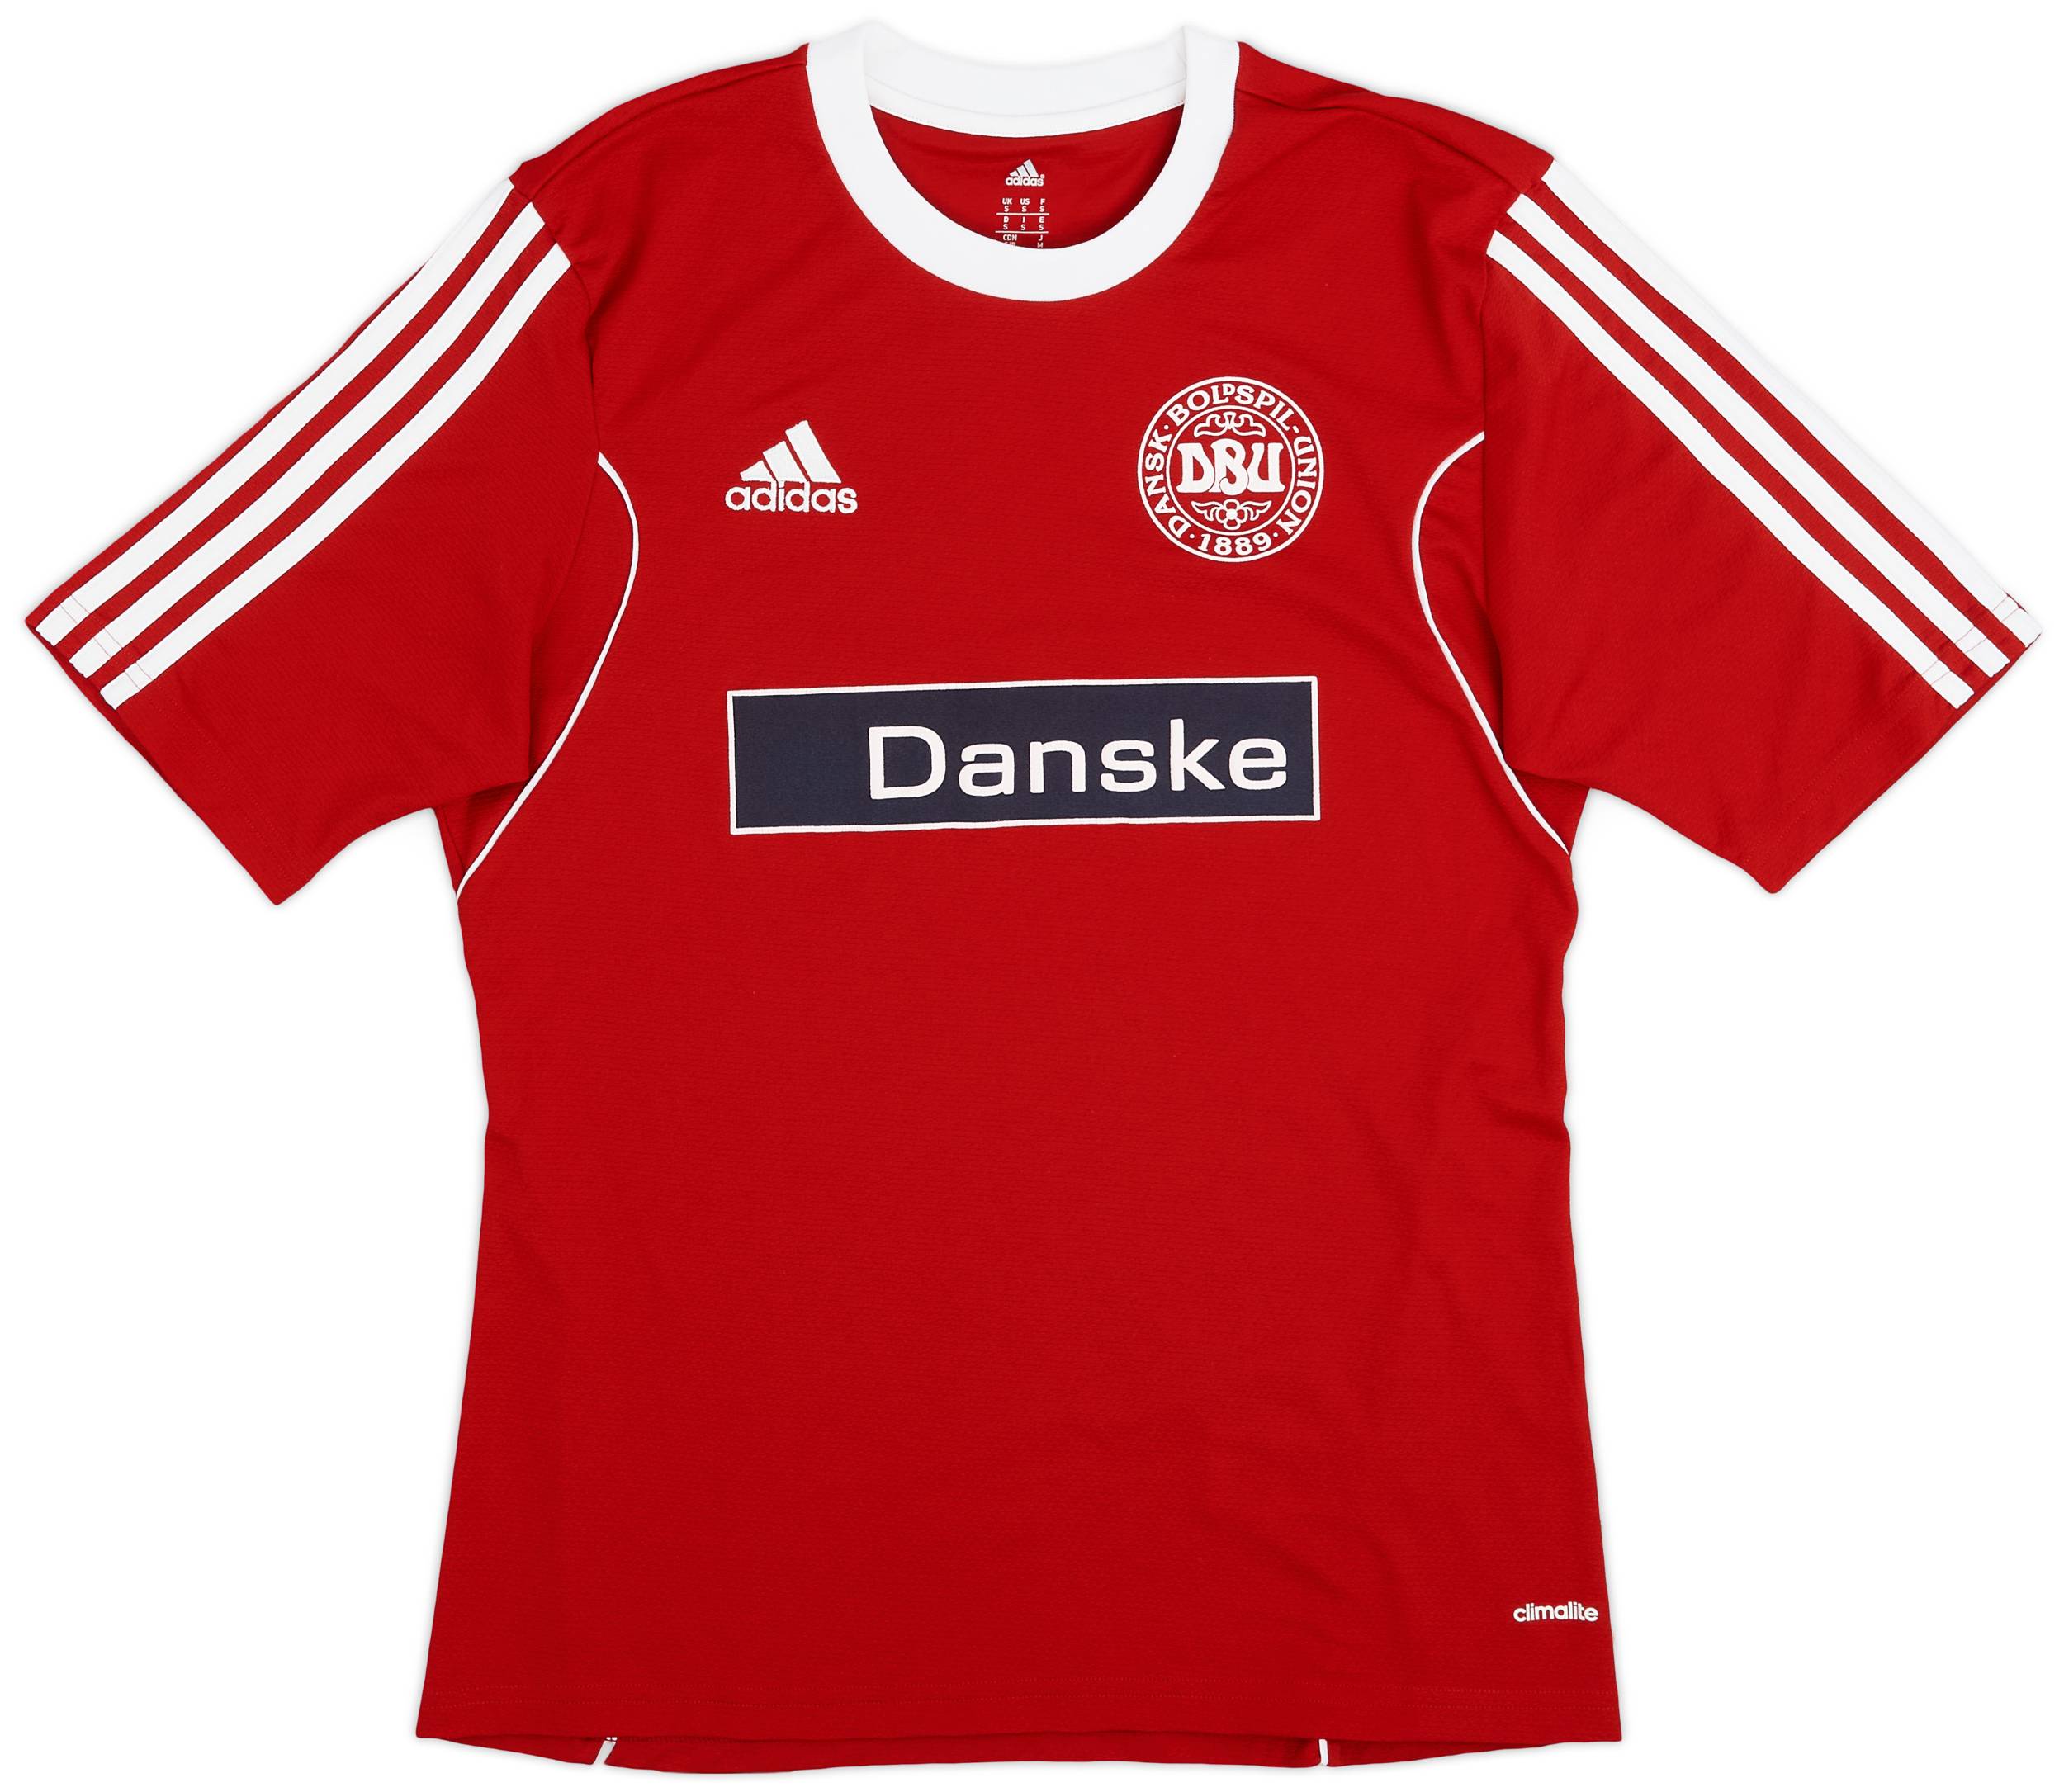 2012-13 Denmark adidas Training Shirt - 8/10 - (S)